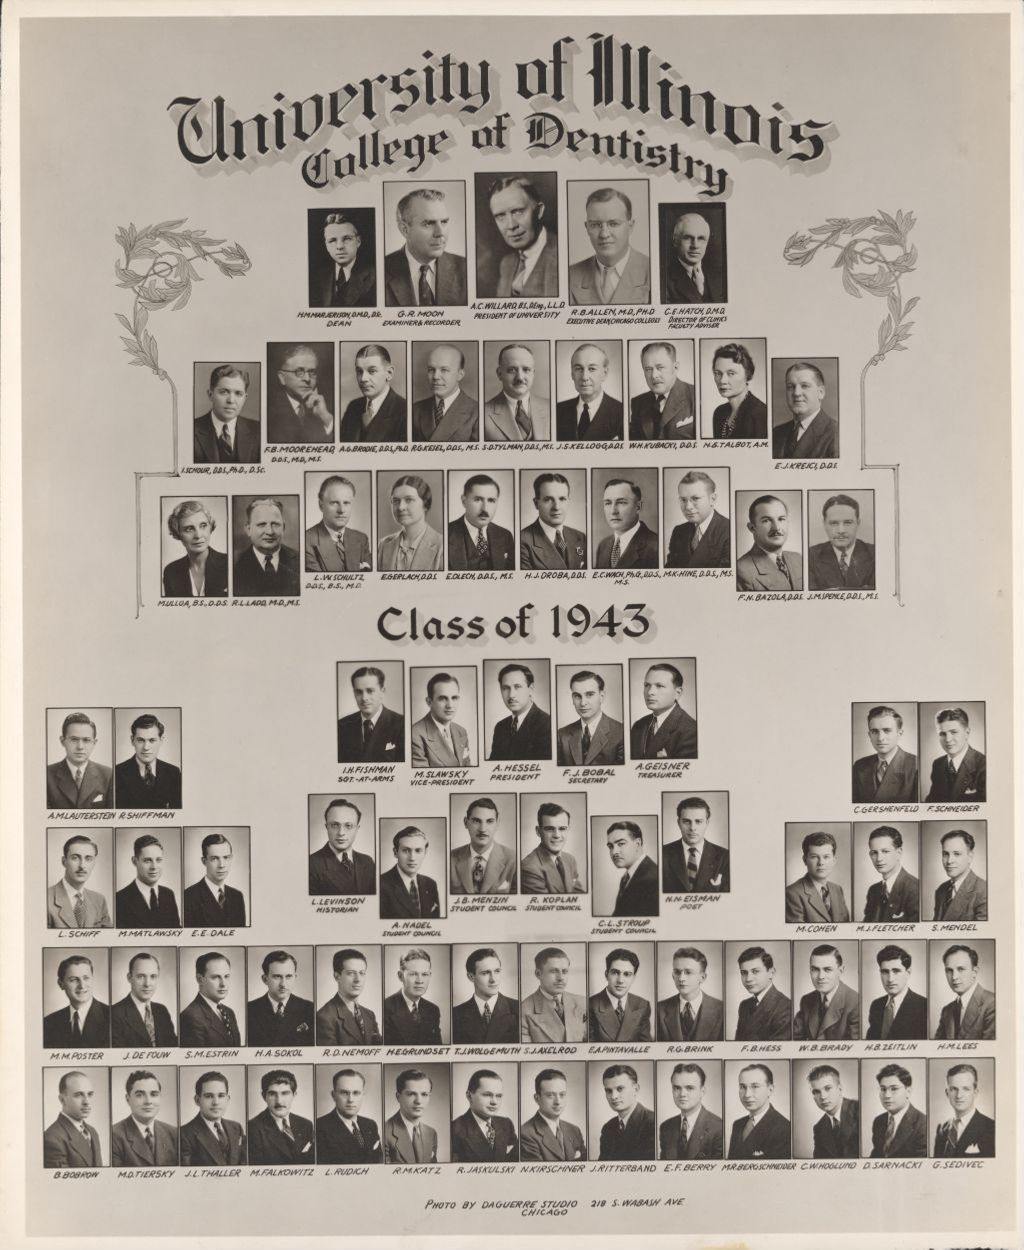 1943 graduating class, University of Illinois College of Dentistry